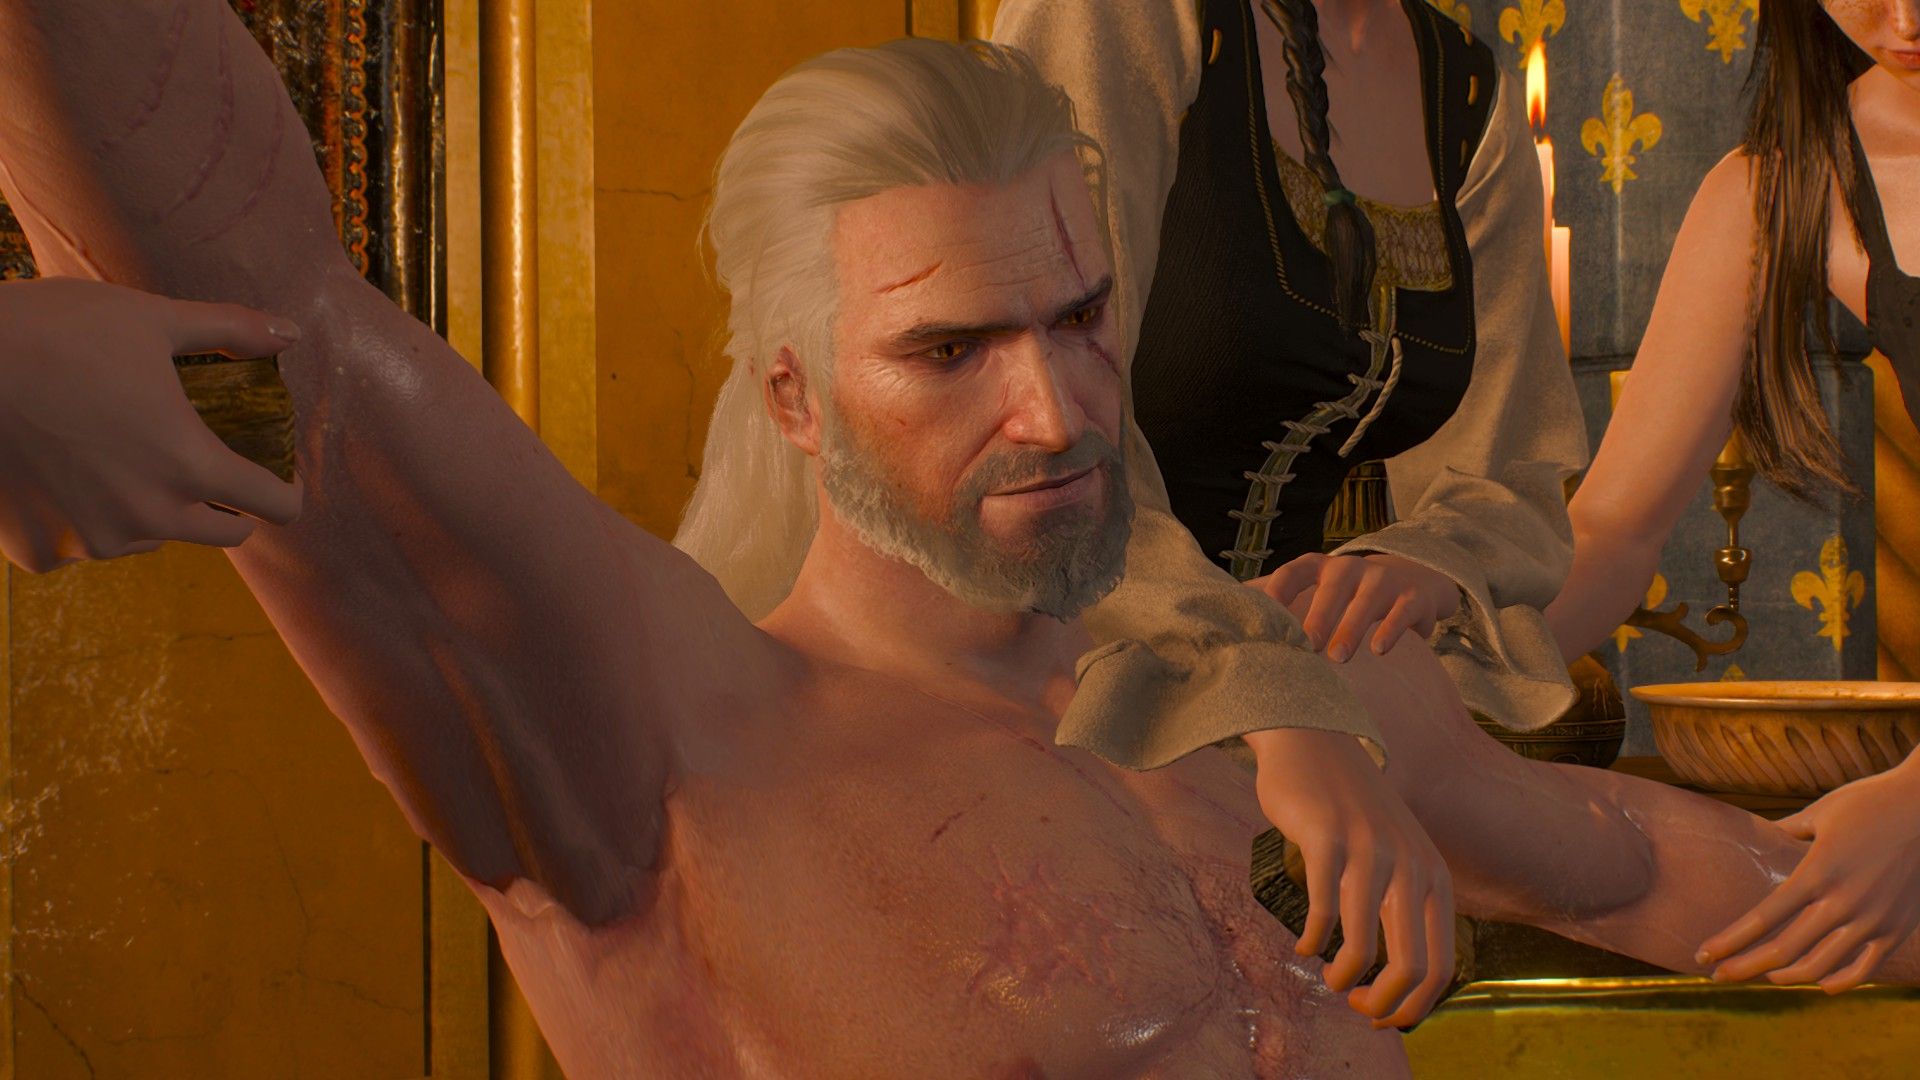 Geralt looks satisfied as three women scrub his body clean. 